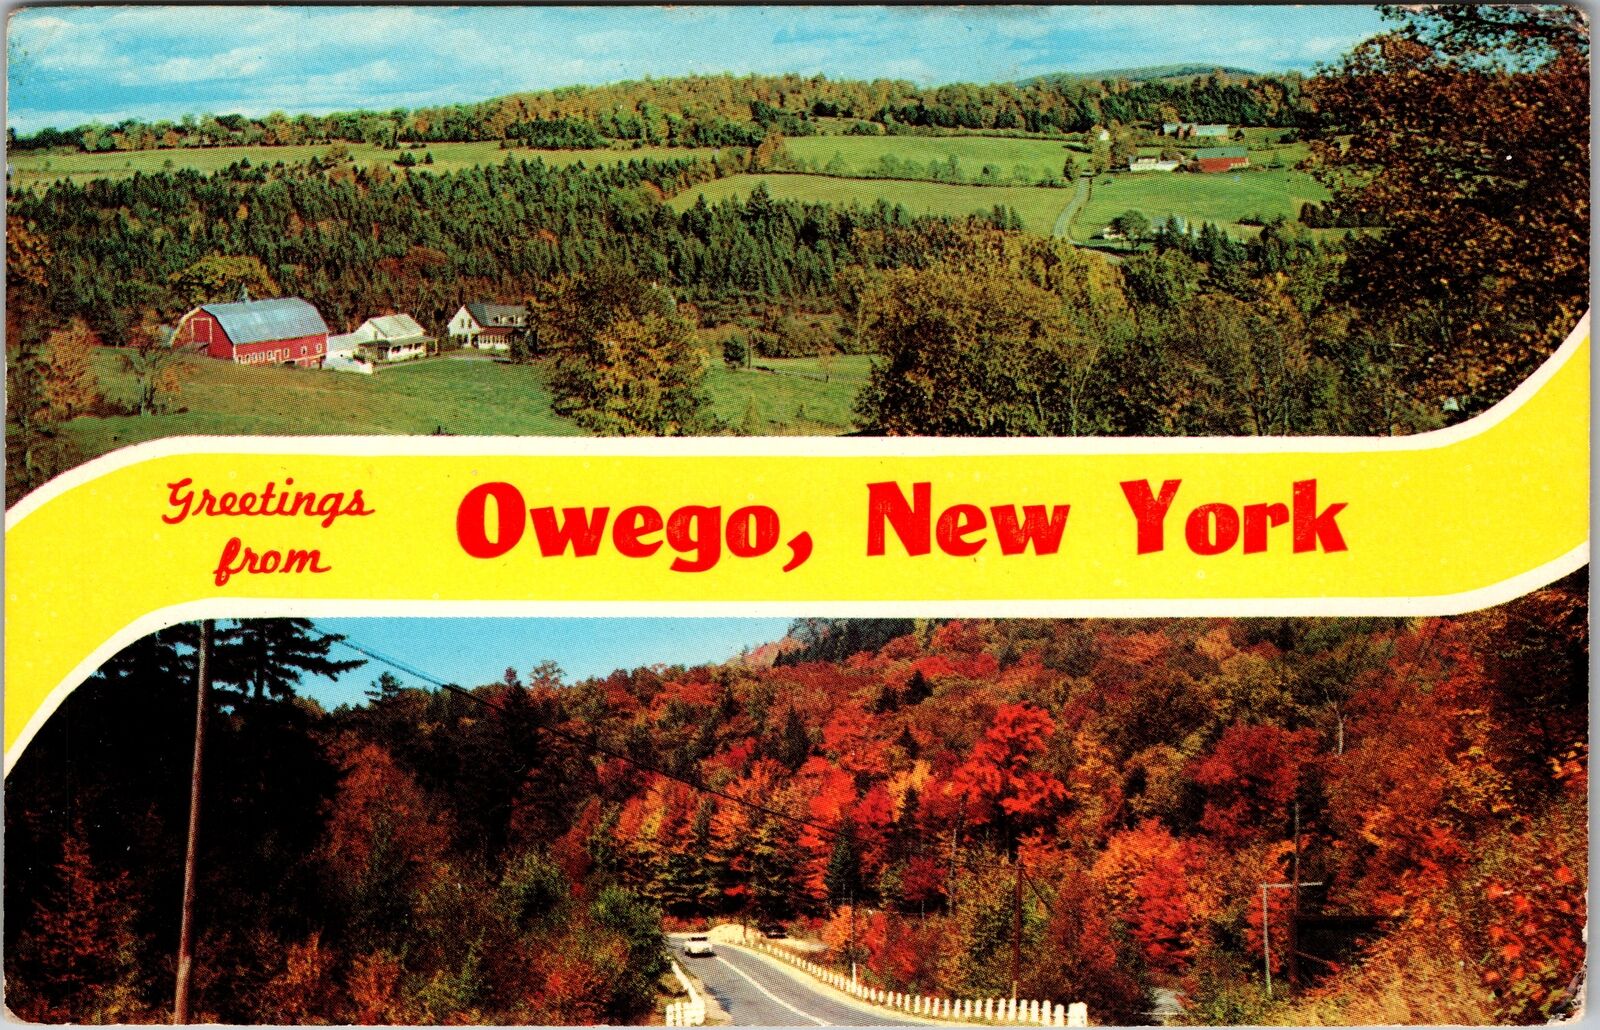 Owego NY-New York, Scenic Banner Greetings, Vintage Postcard